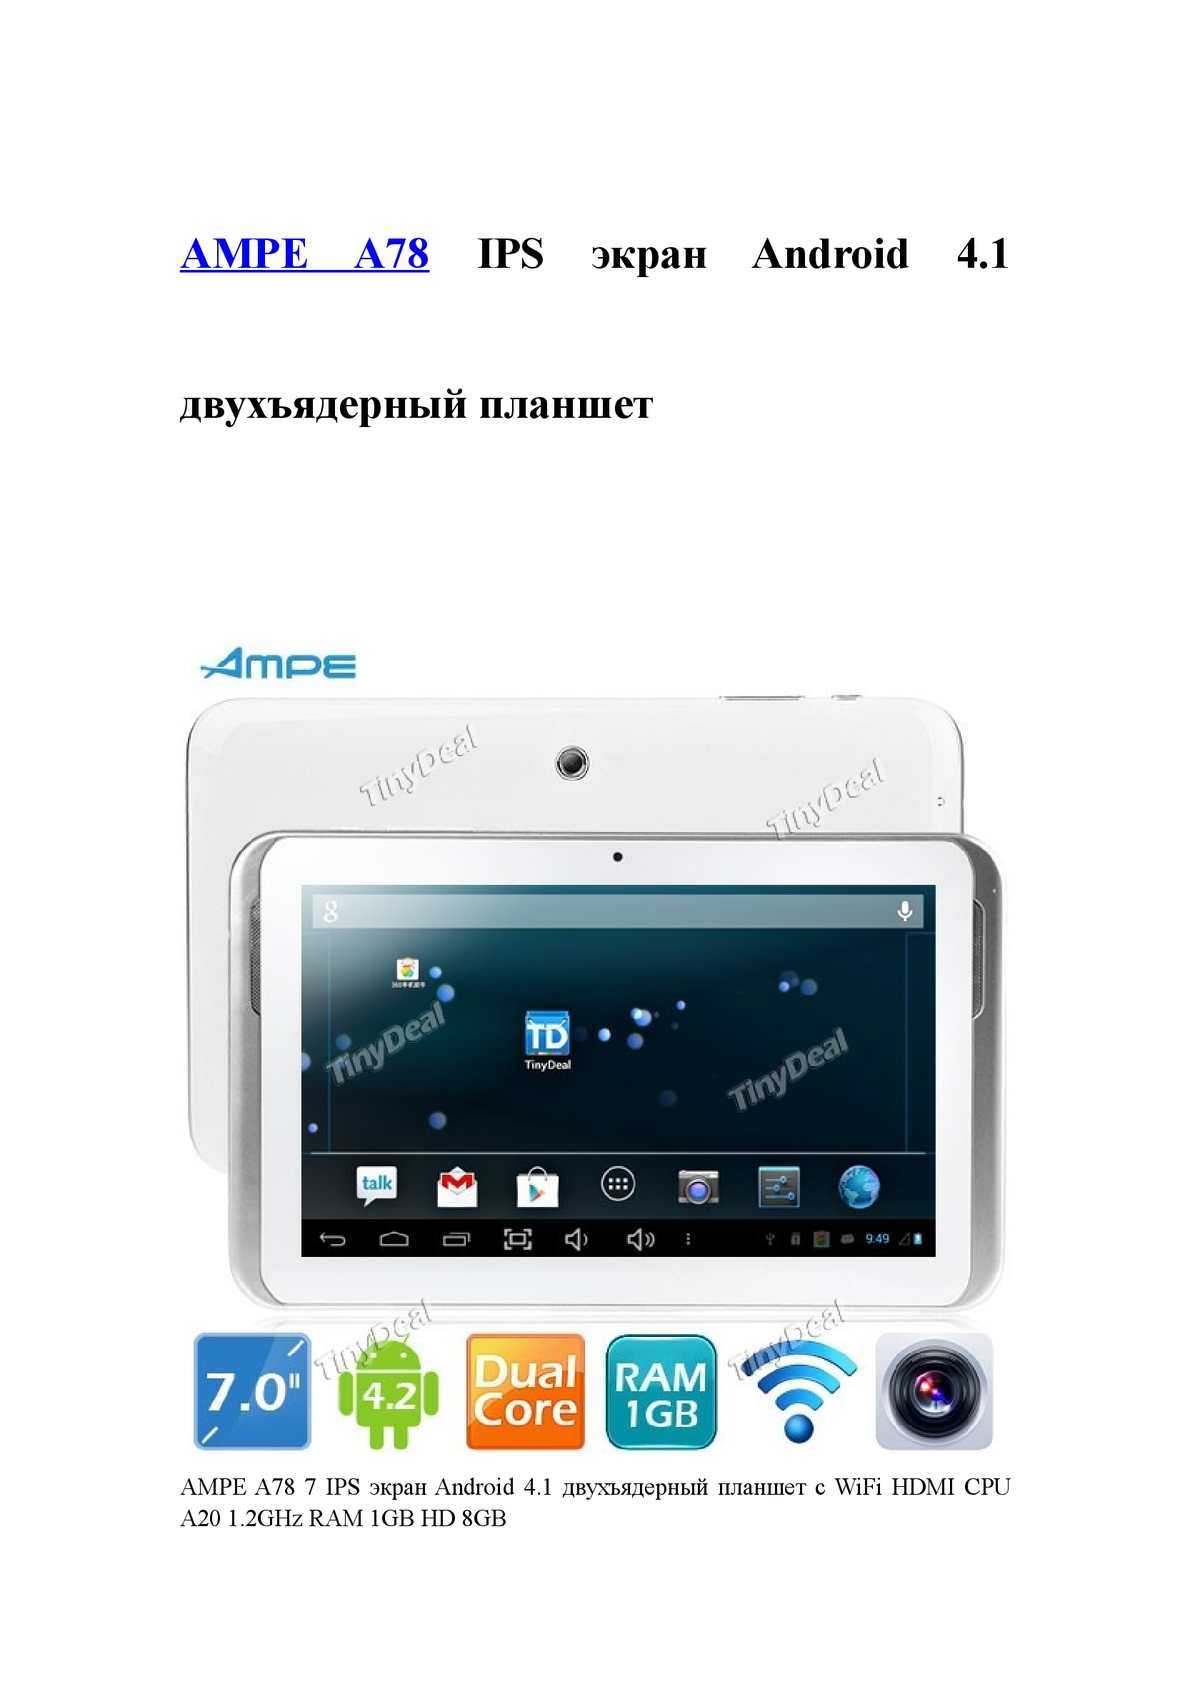 Ampe a78 - планшетный компьютер, android 4.1.1, 7" ips, rockchip rk3066 (2x1.6ghz), 1gb ram, 8gb rom, wi-fi, hdmi, 0.3mp фронтальная камера, 2mp задняя камера